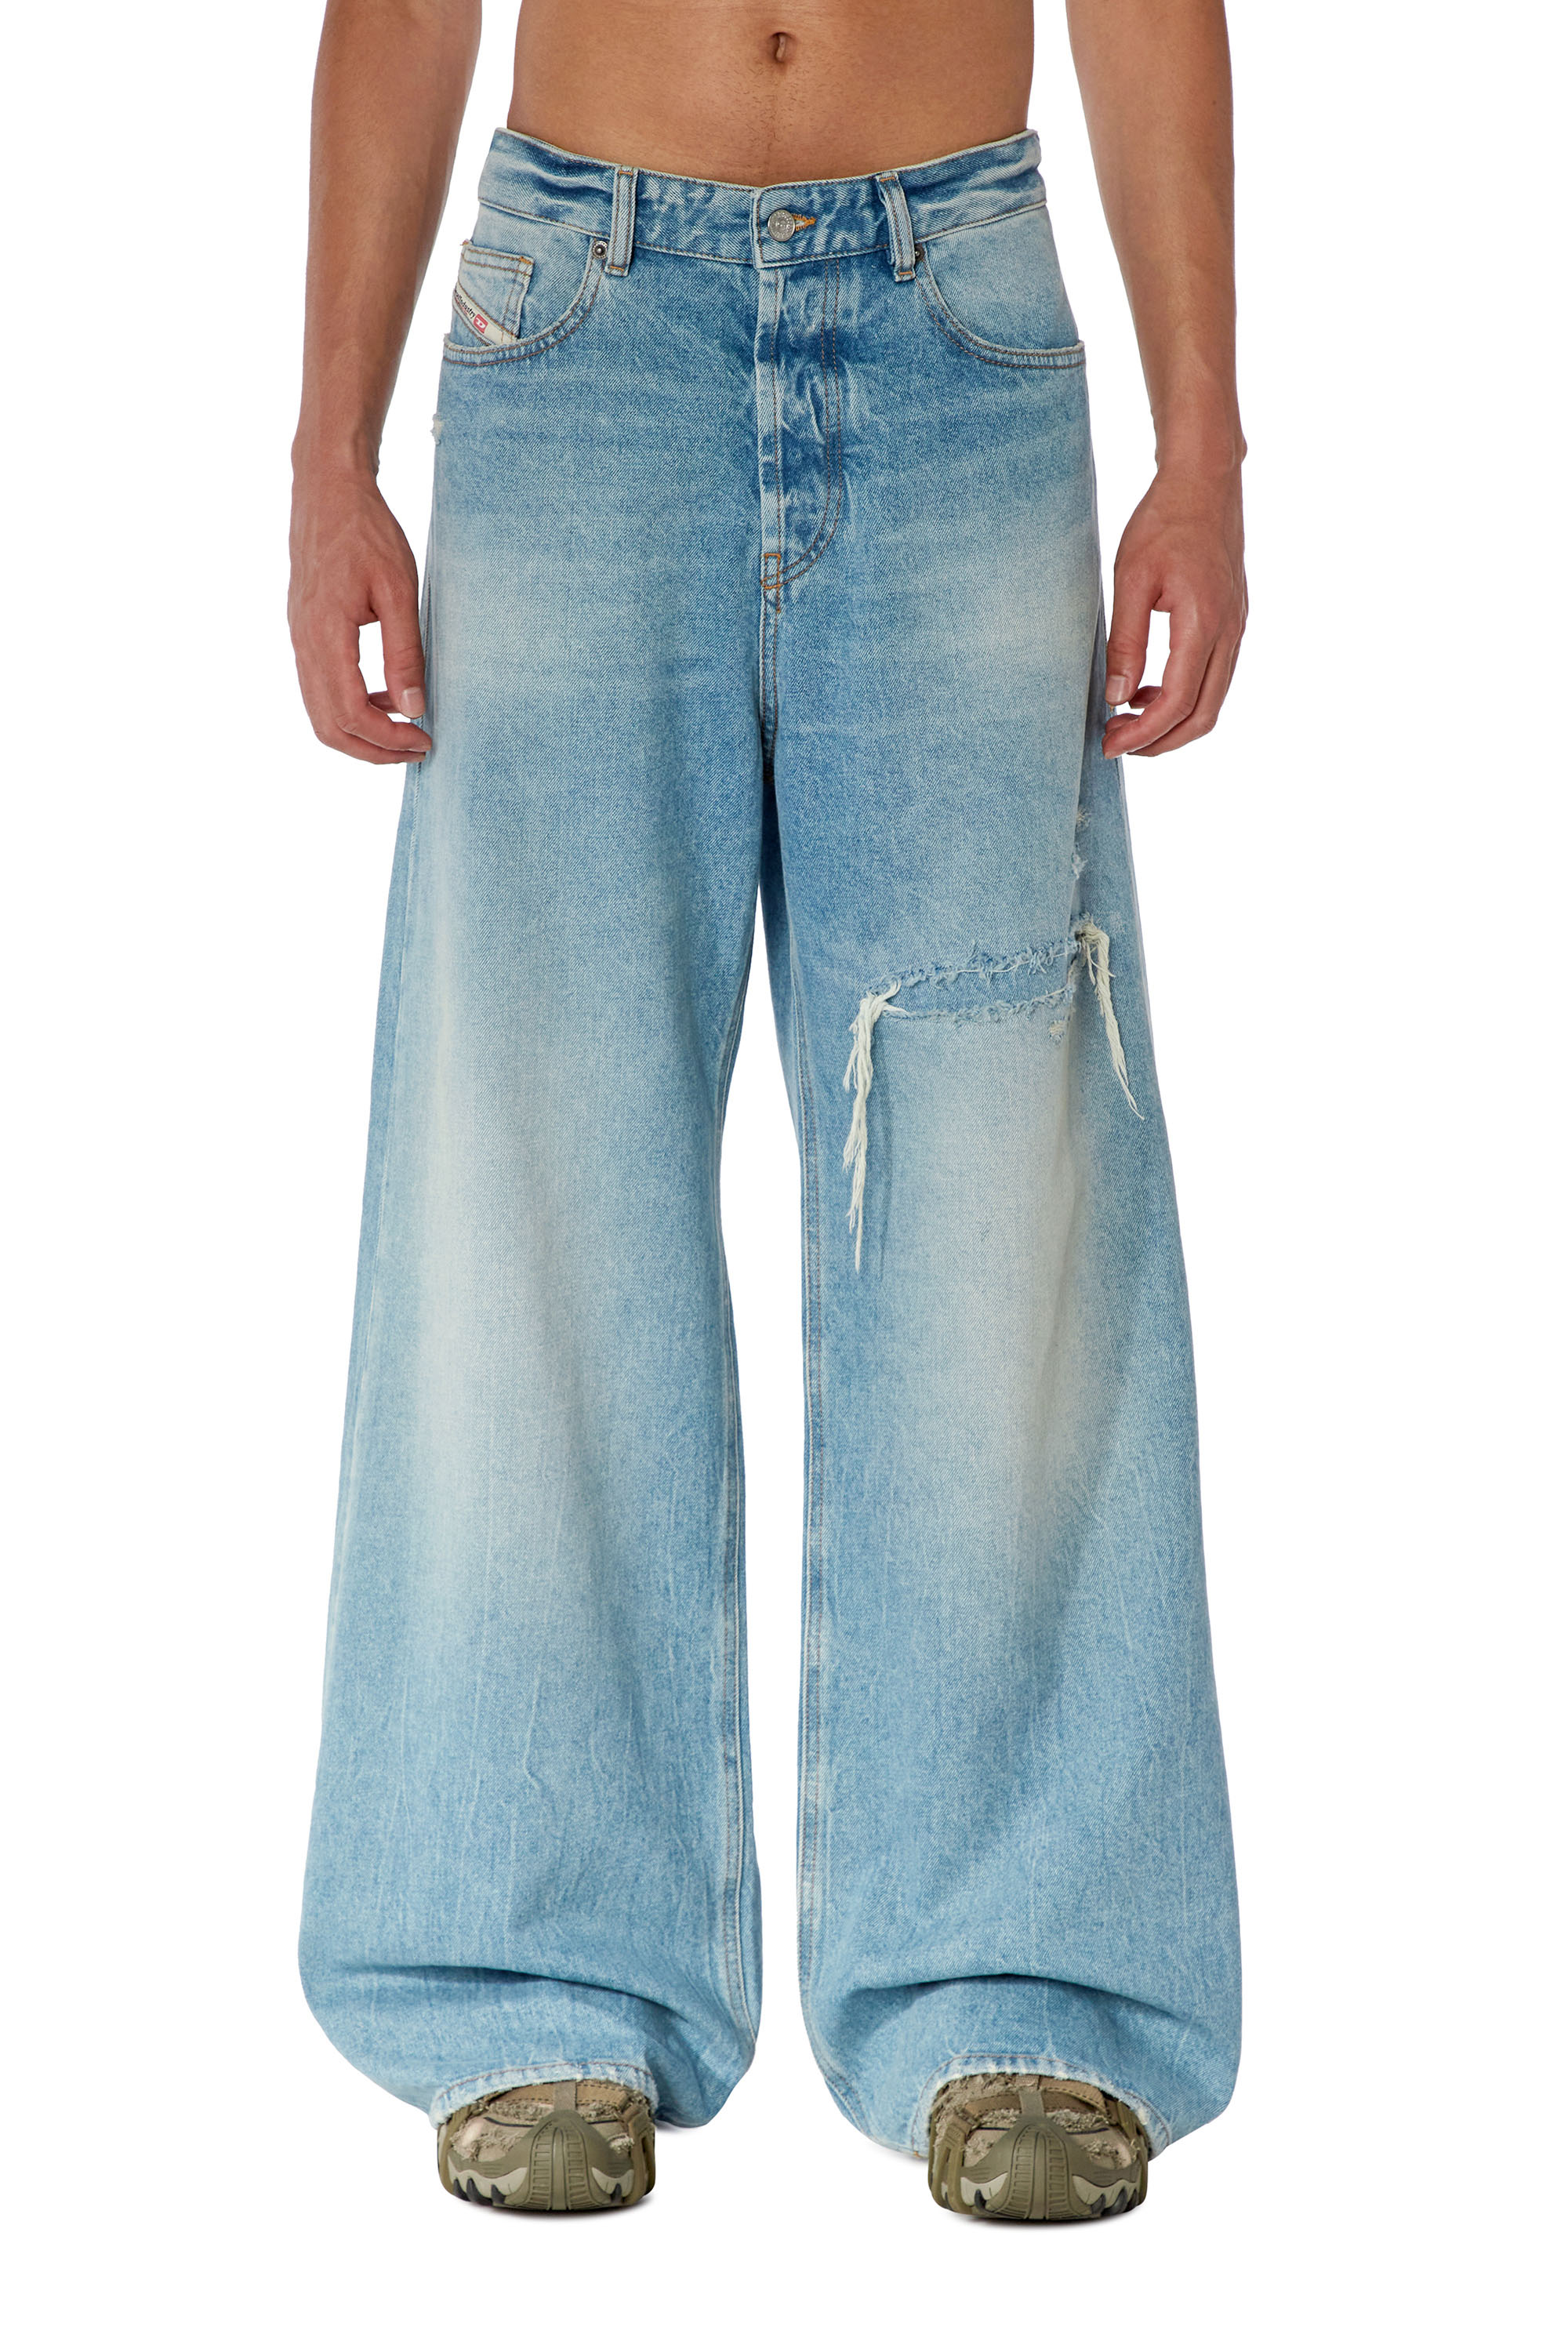 DIESEL Straight Jeans D-Rise denim 09e25股上33cm - デニム/ジーンズ